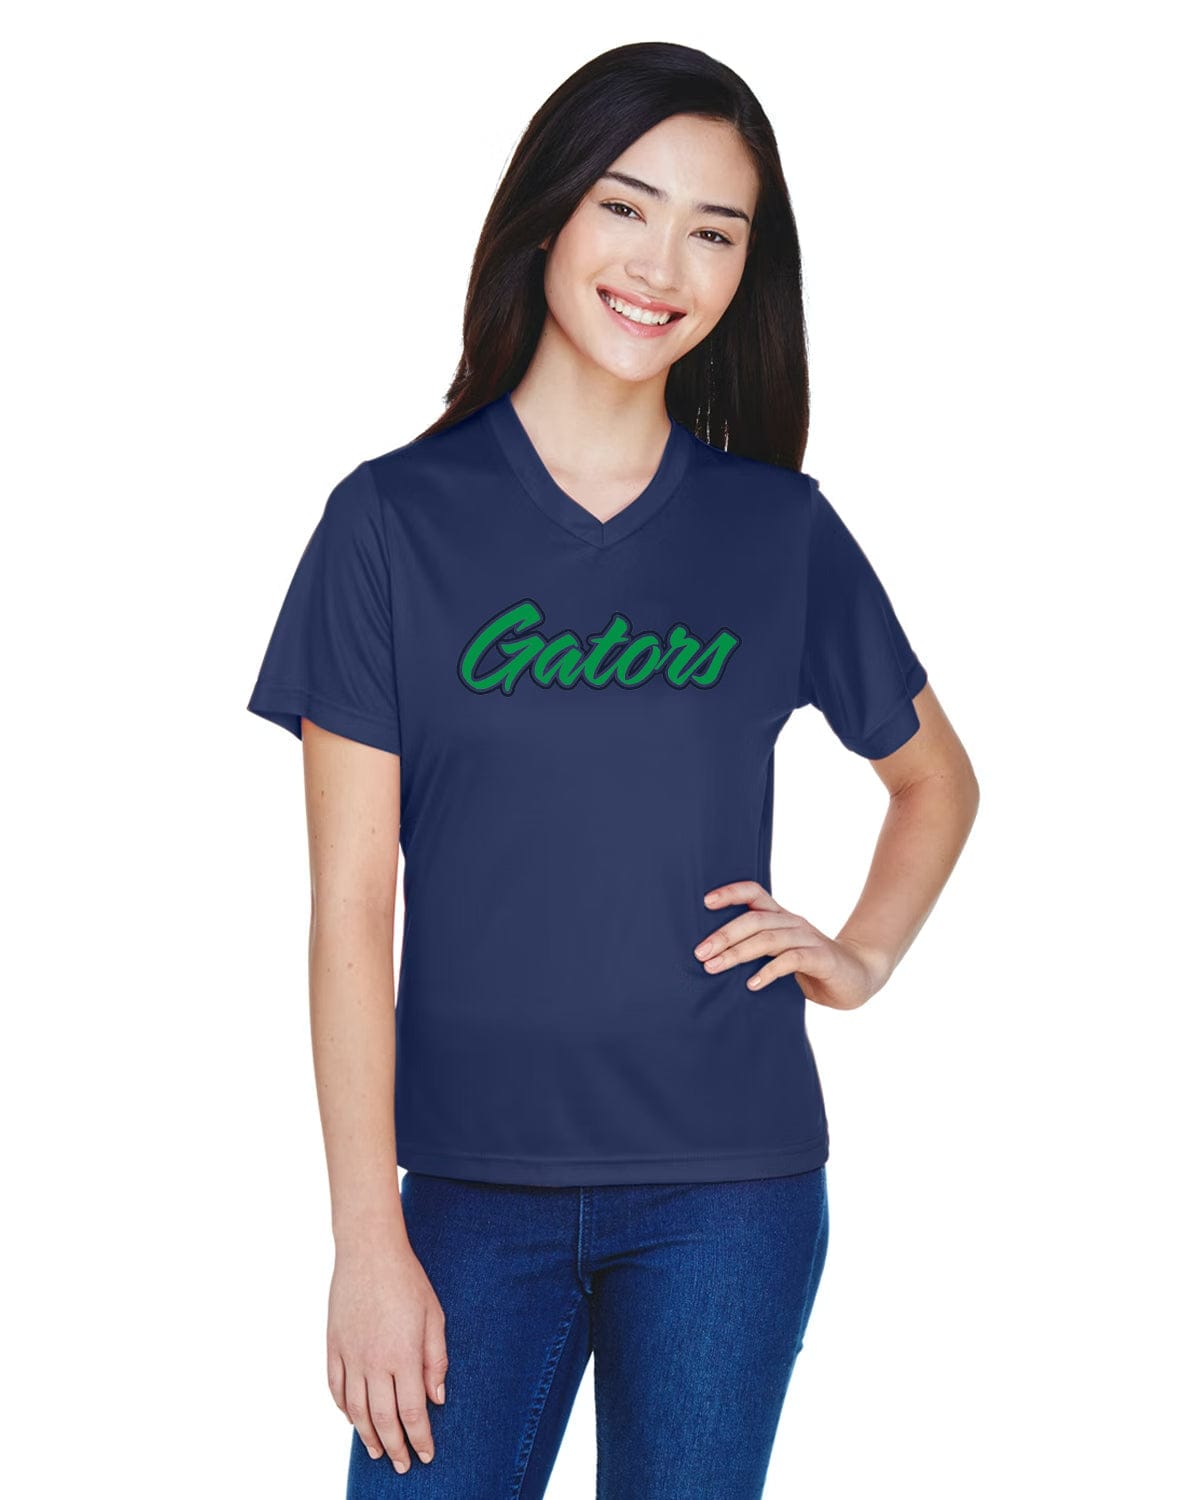 Gators 11/12 Football Women's V-Neck Shirt with Vinyl Logo